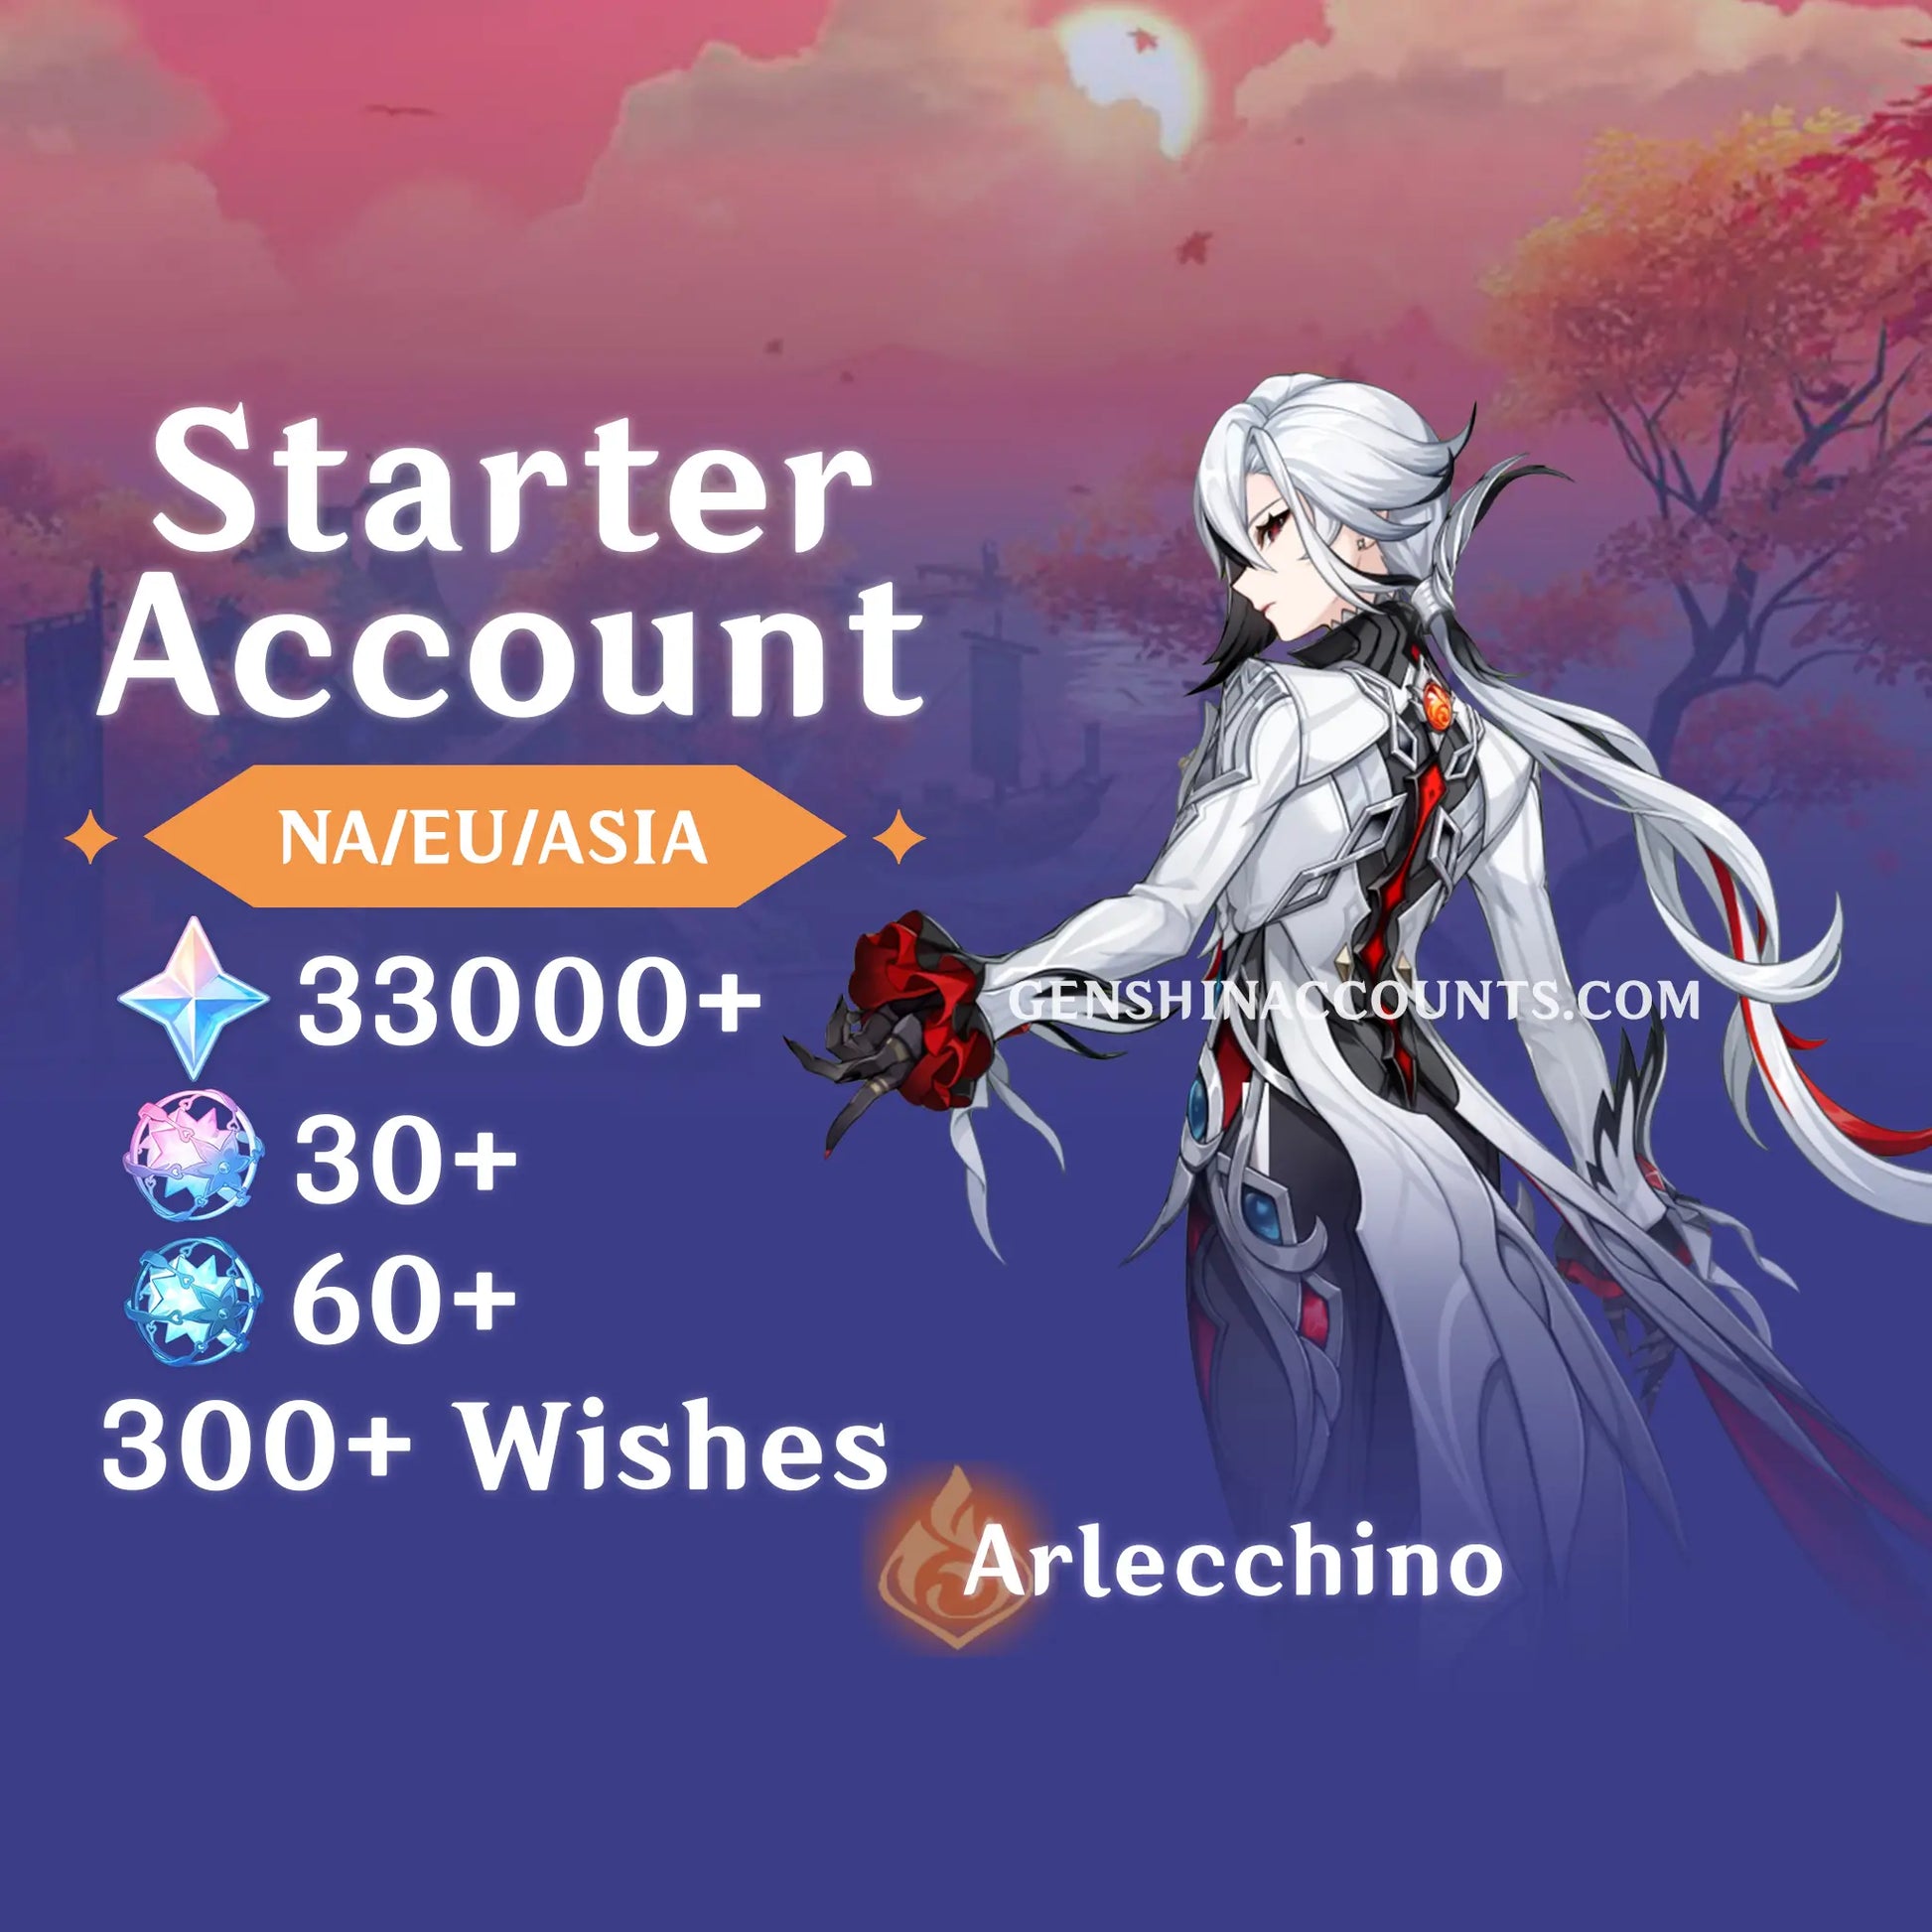 Arlecchino - AR40+ Genshin Impact Farmed Starter Account